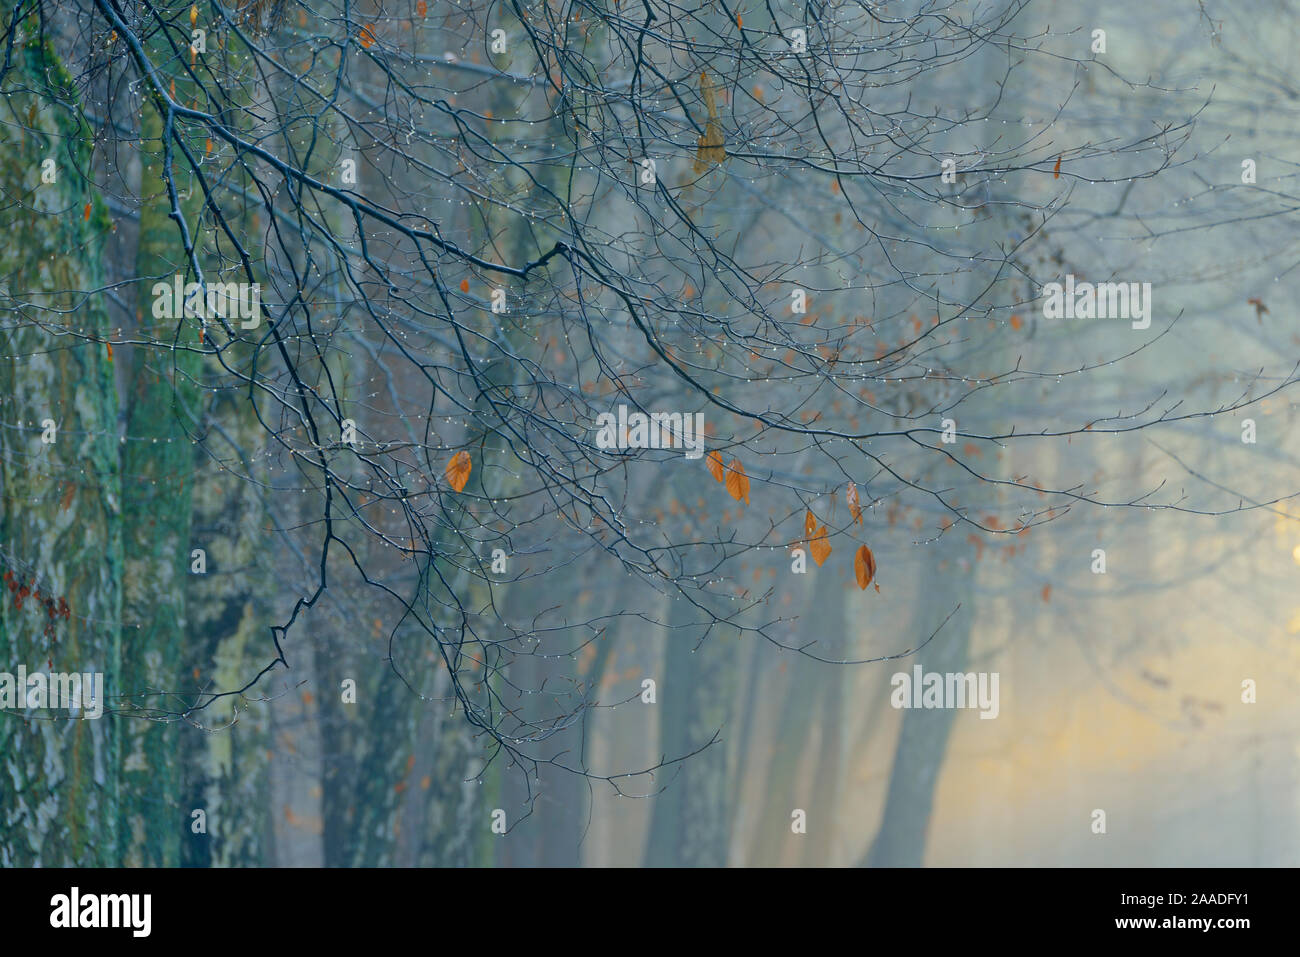 European beech (Fagus sylvatica) and Silver birch (Betula pendula) woodland in mist, Potsdam, Germany, January 2016. Stock Photo